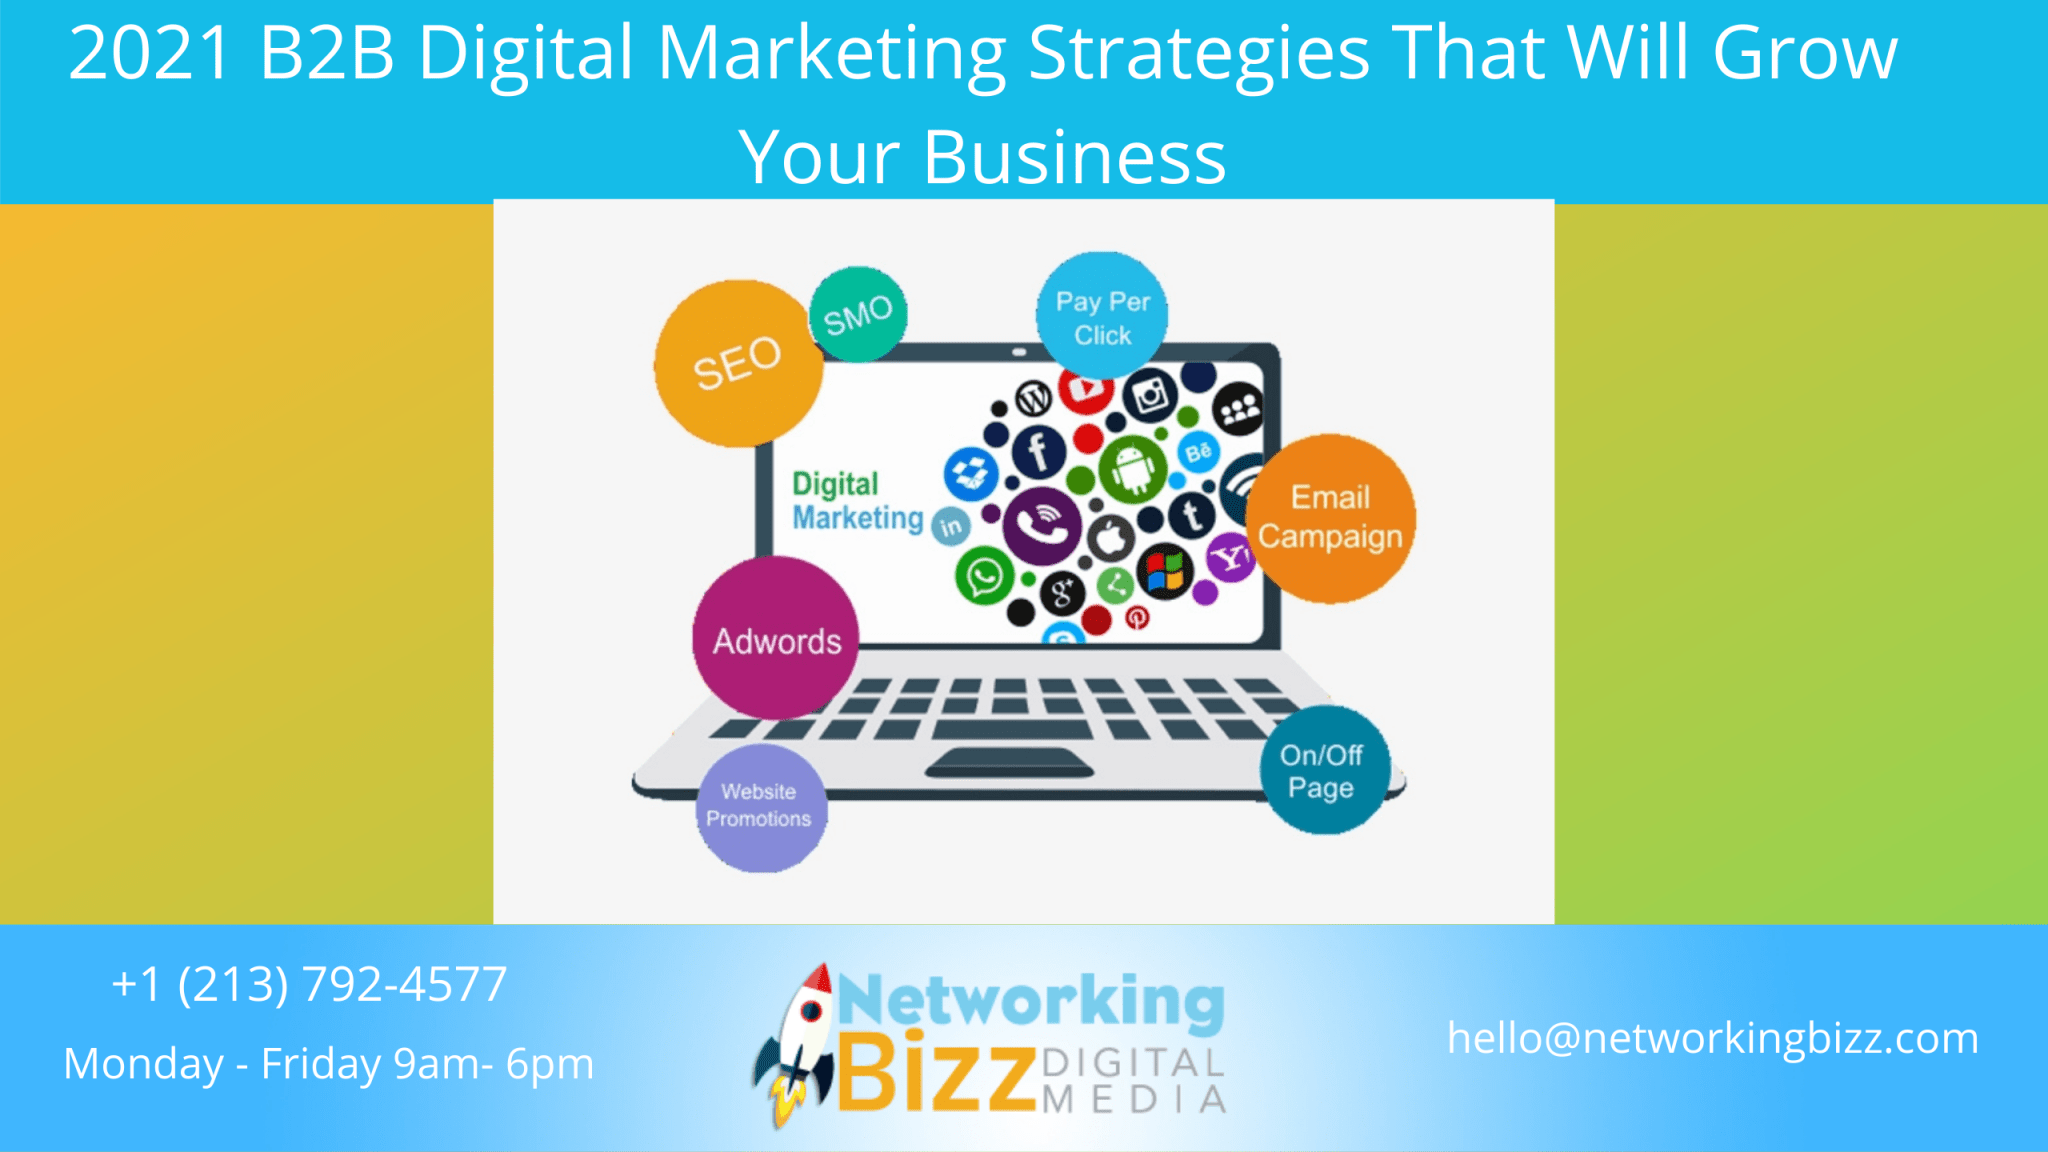 2021 B2B Digital Marketing Strategies That Will Grow Your Business